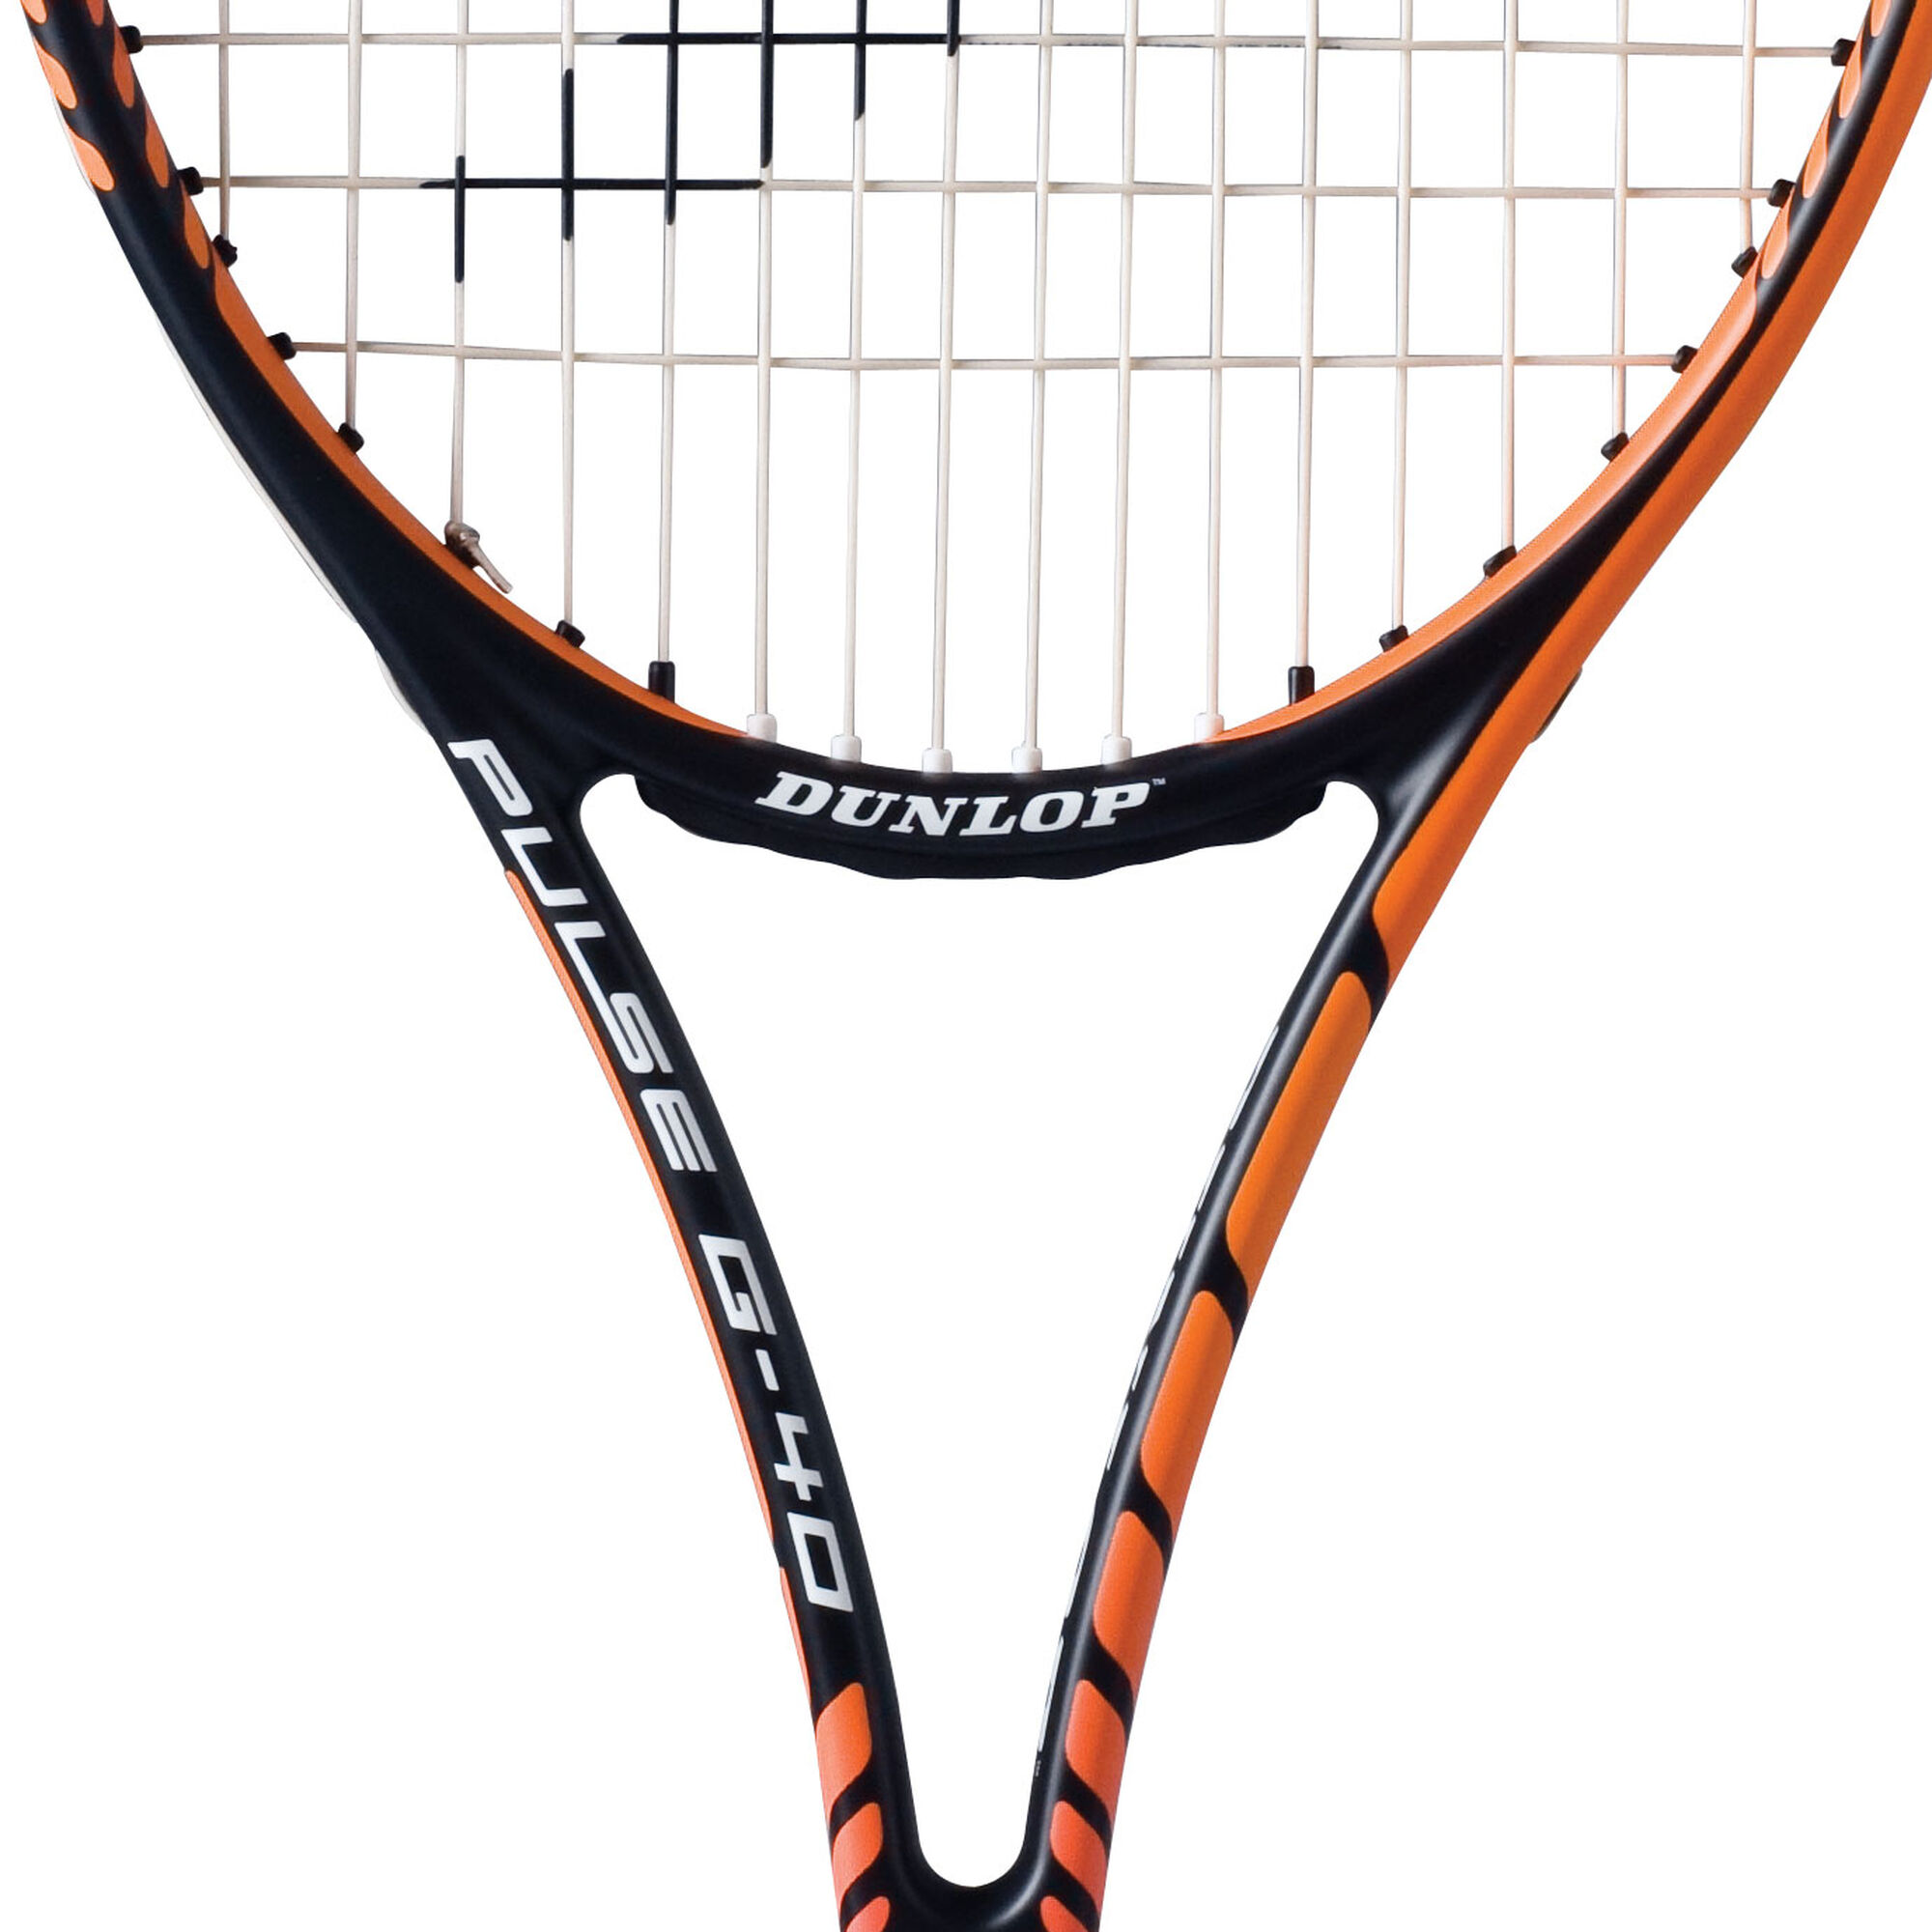 Buy Tennis rackets from Dunlop online